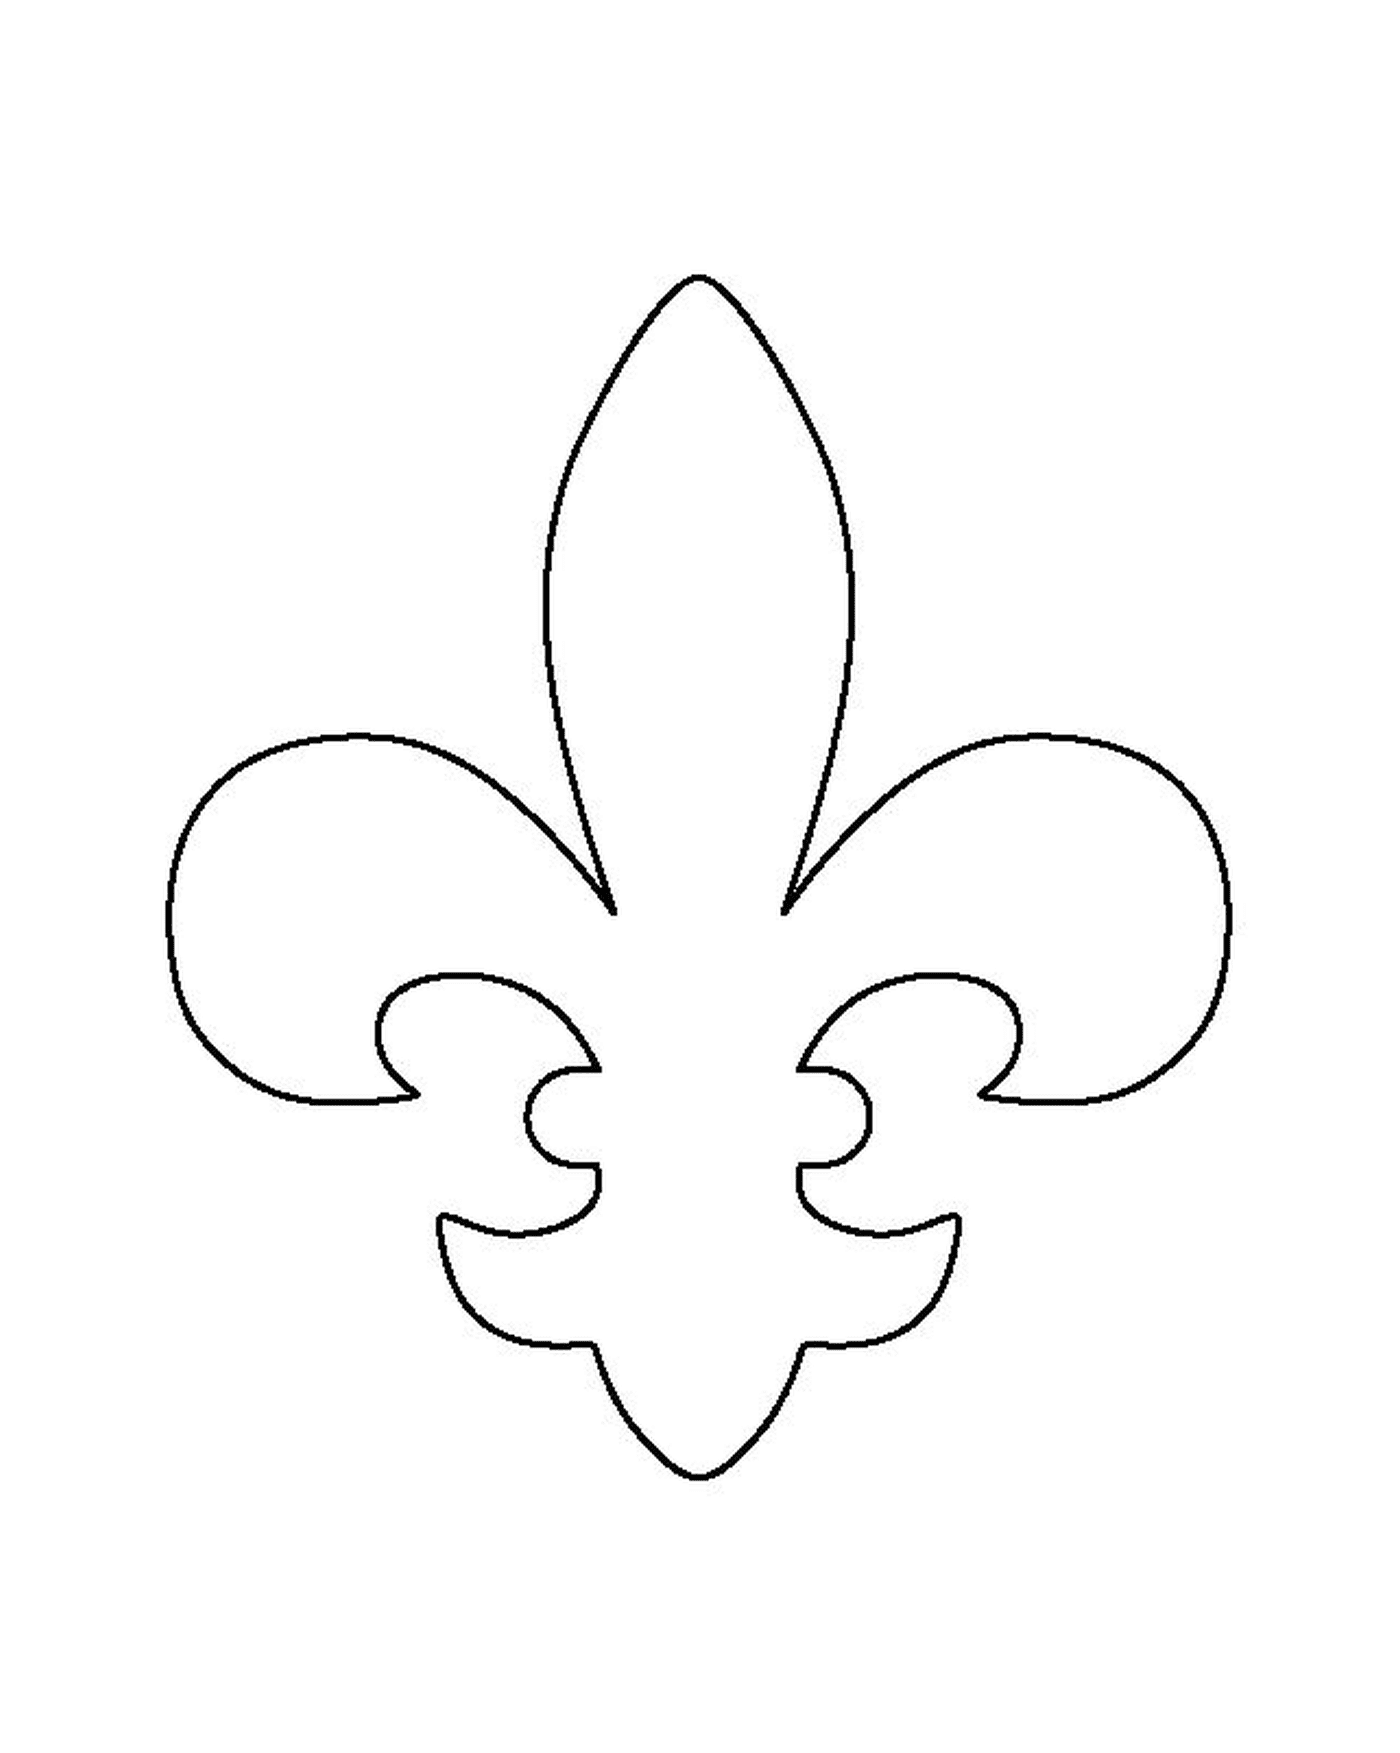  Un patrón de flor de lirio 